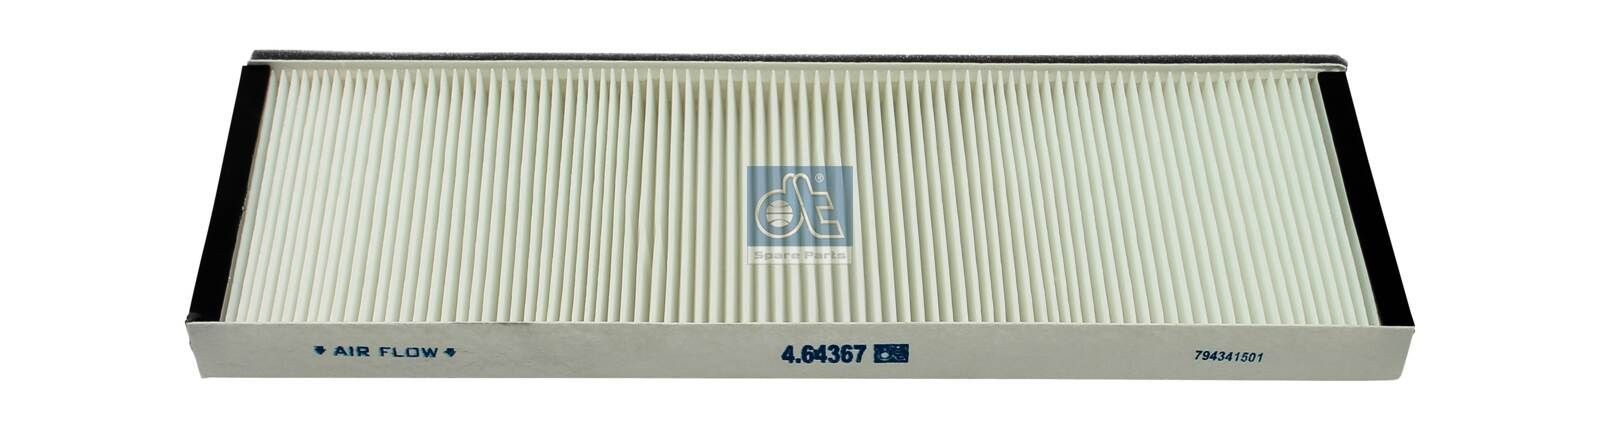 CU 4662 DT Spare Parts Pollen Filter, 456 mm x 156 mm x 30 mm Width: 156mm, Height: 30mm, Length: 456mm Cabin filter 4.64367 buy